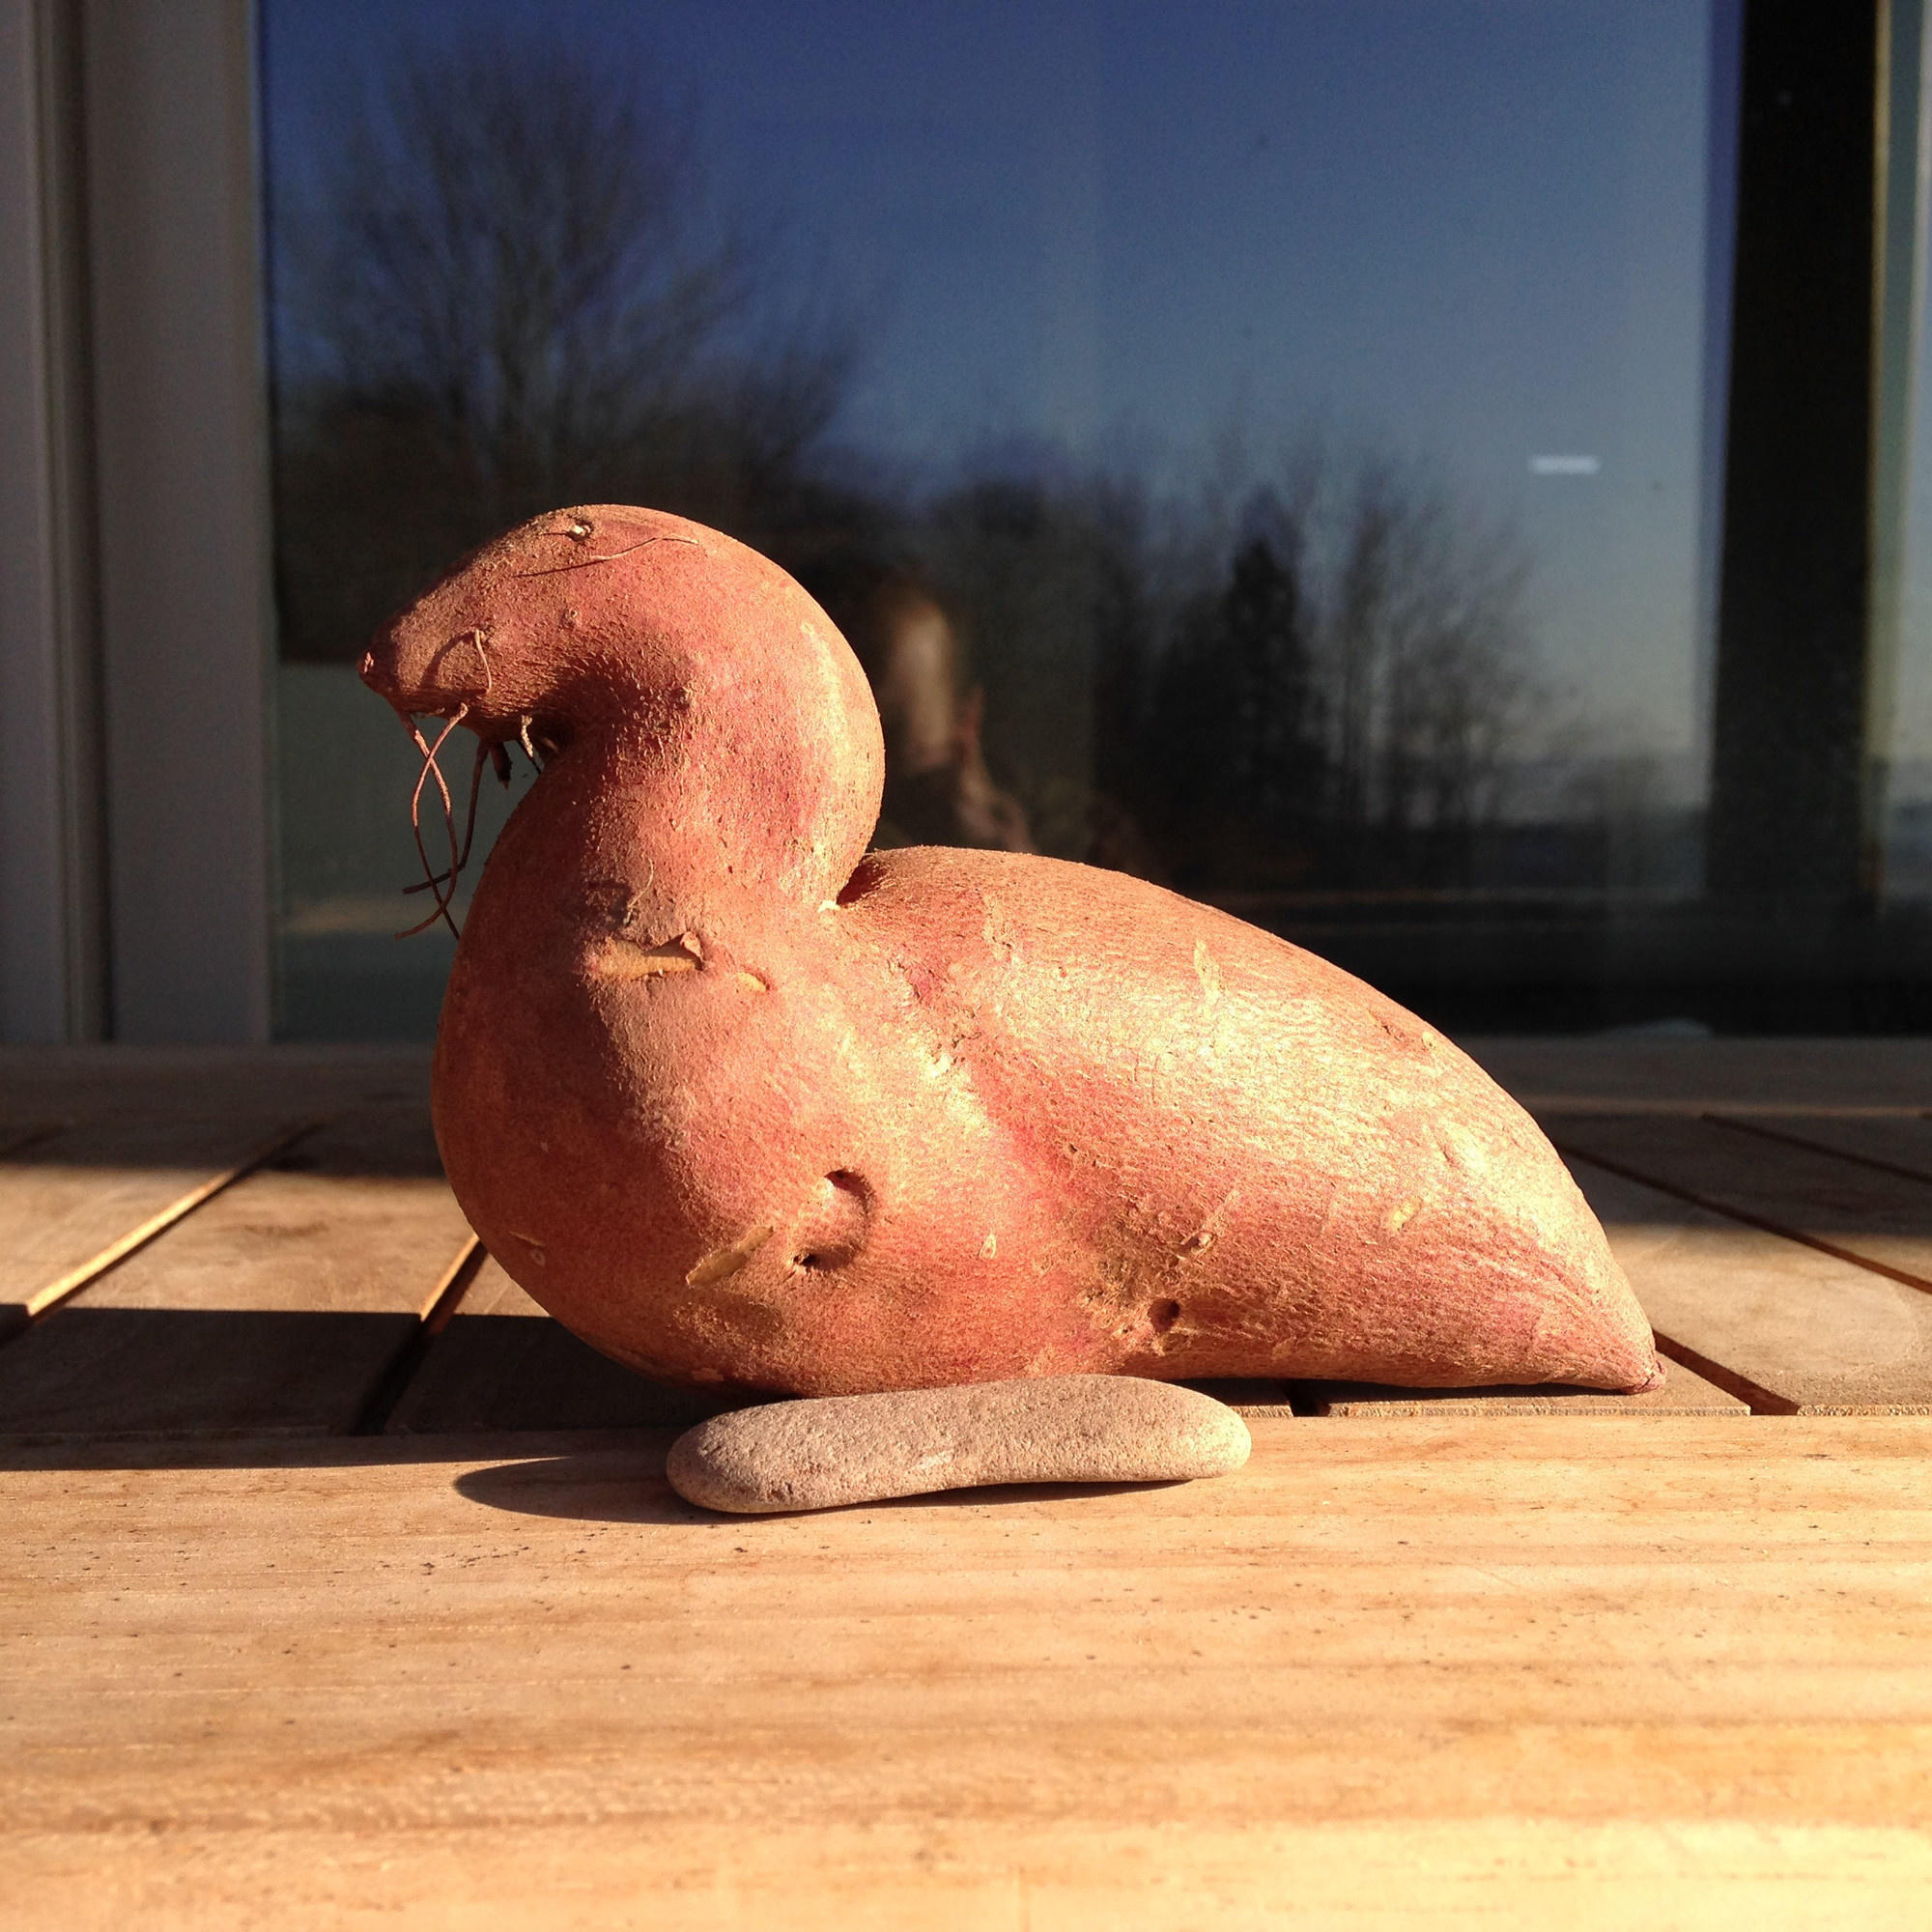 The sweet potato that looks like a seal.